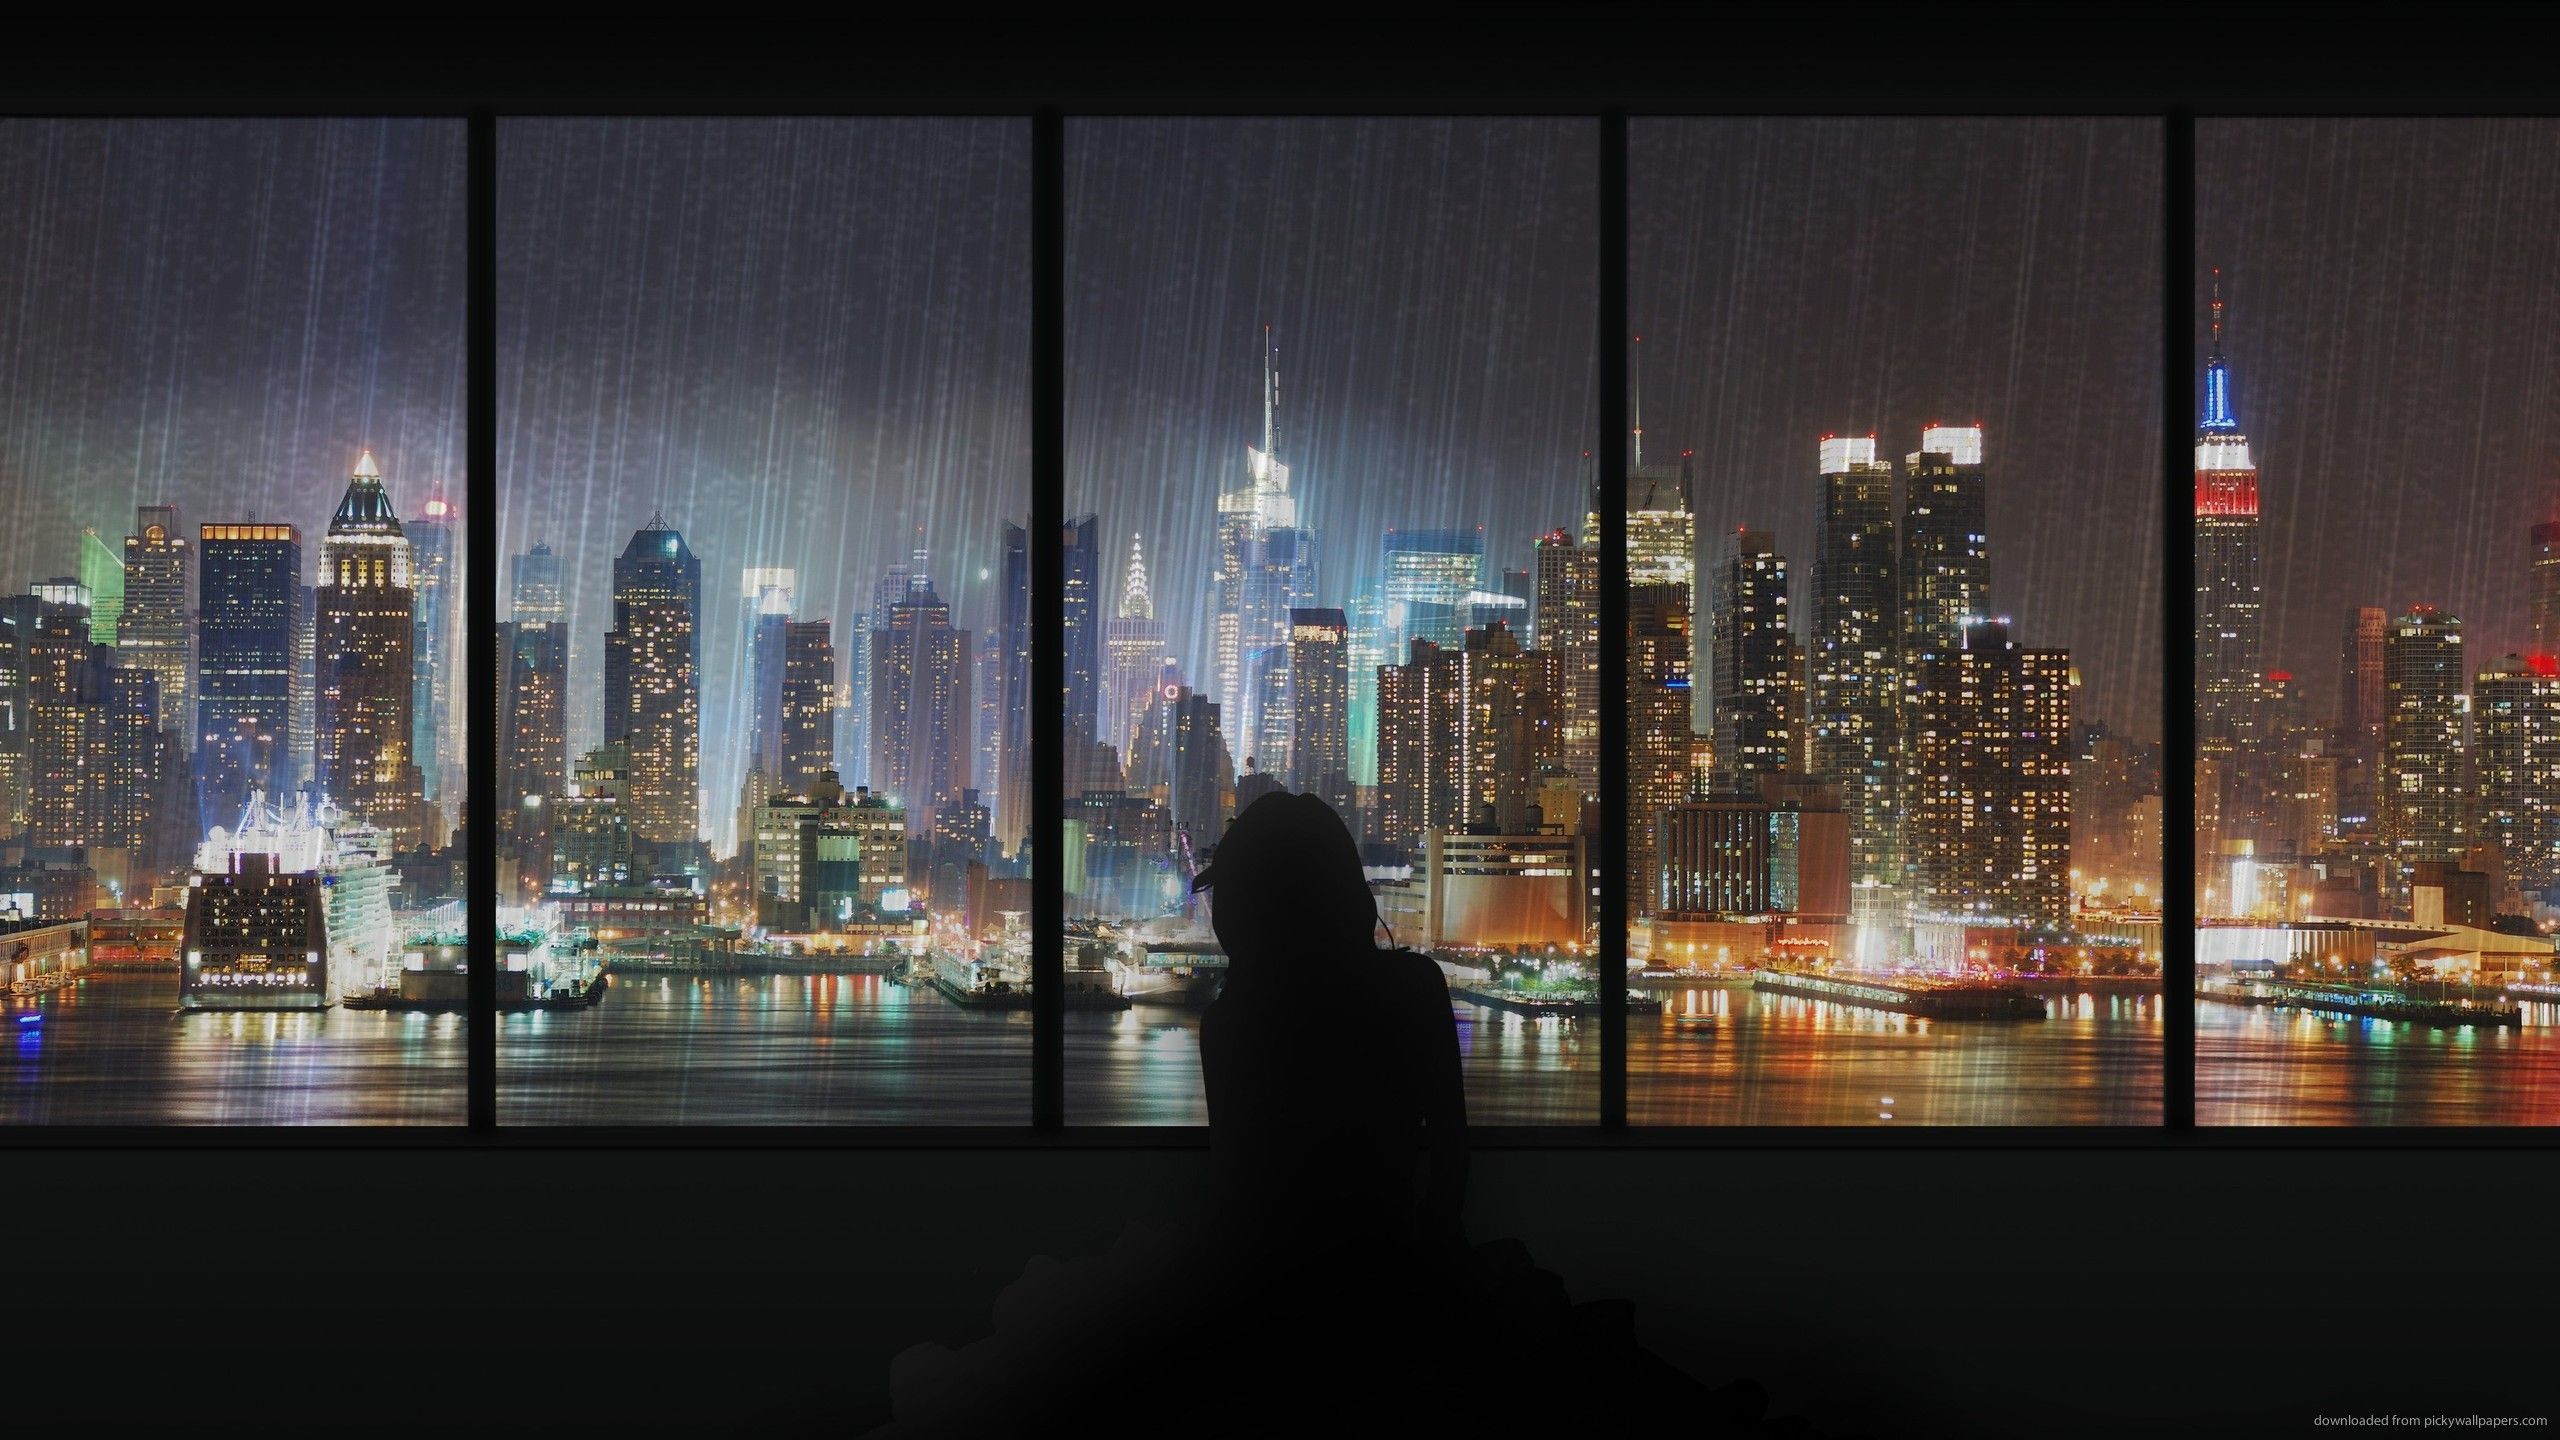 Rainy City At Night Wallpapers 4k Hd Rainy City At Night Backgrounds On Wallpaperbat